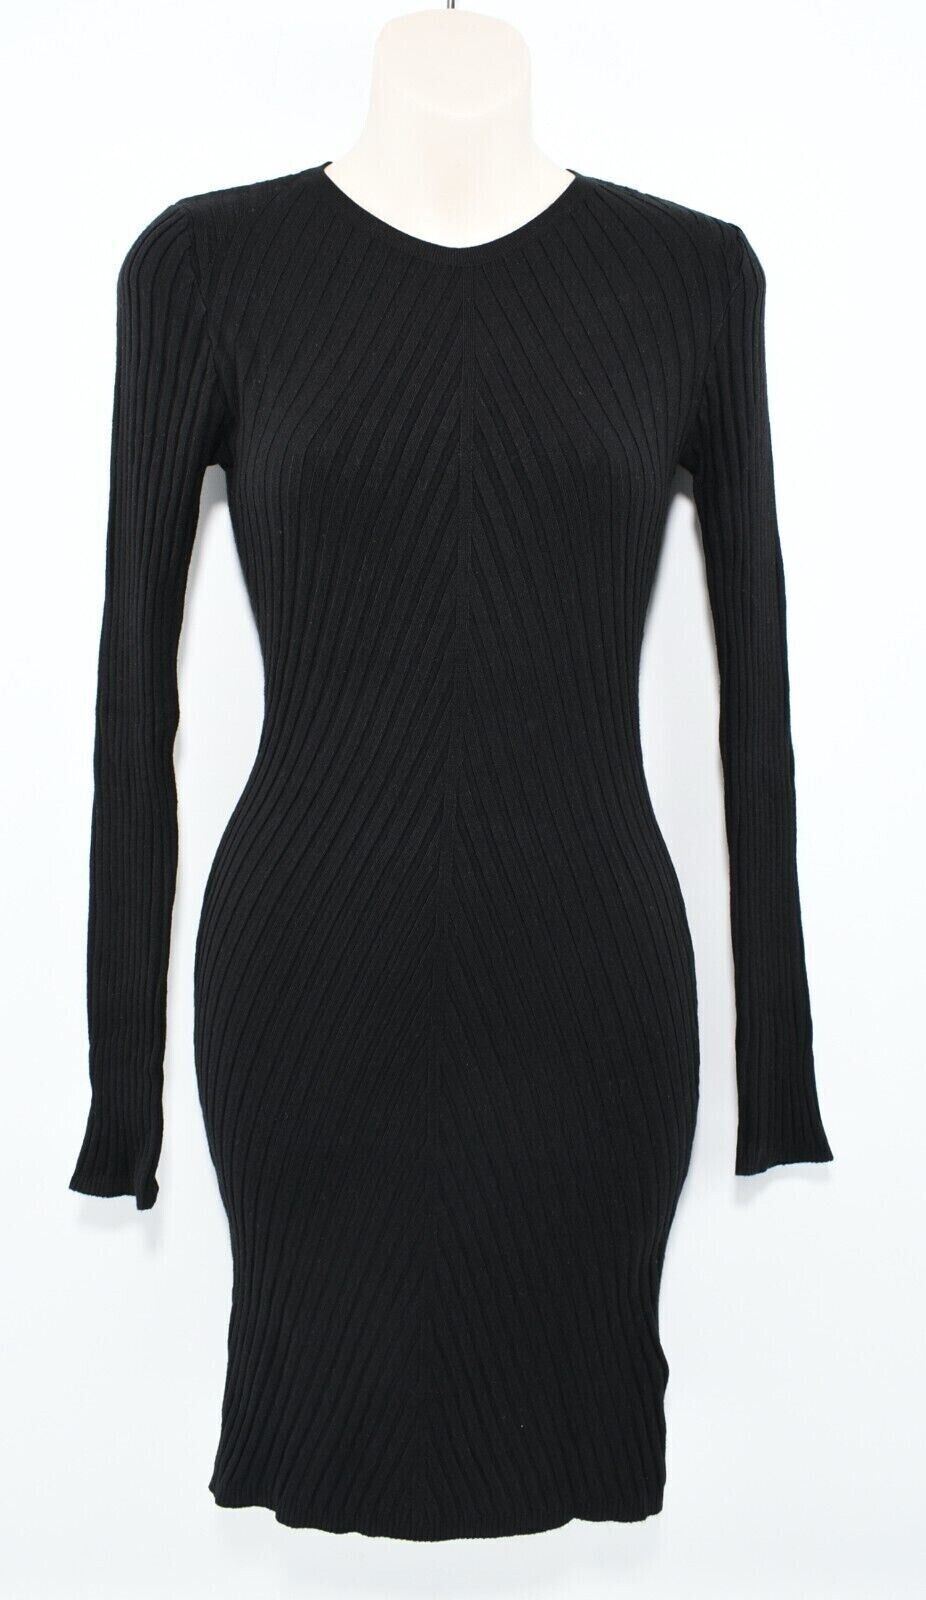 KANGOL Womens Stretch Rib Knit Fitted Dress, Black, size L /UK 14